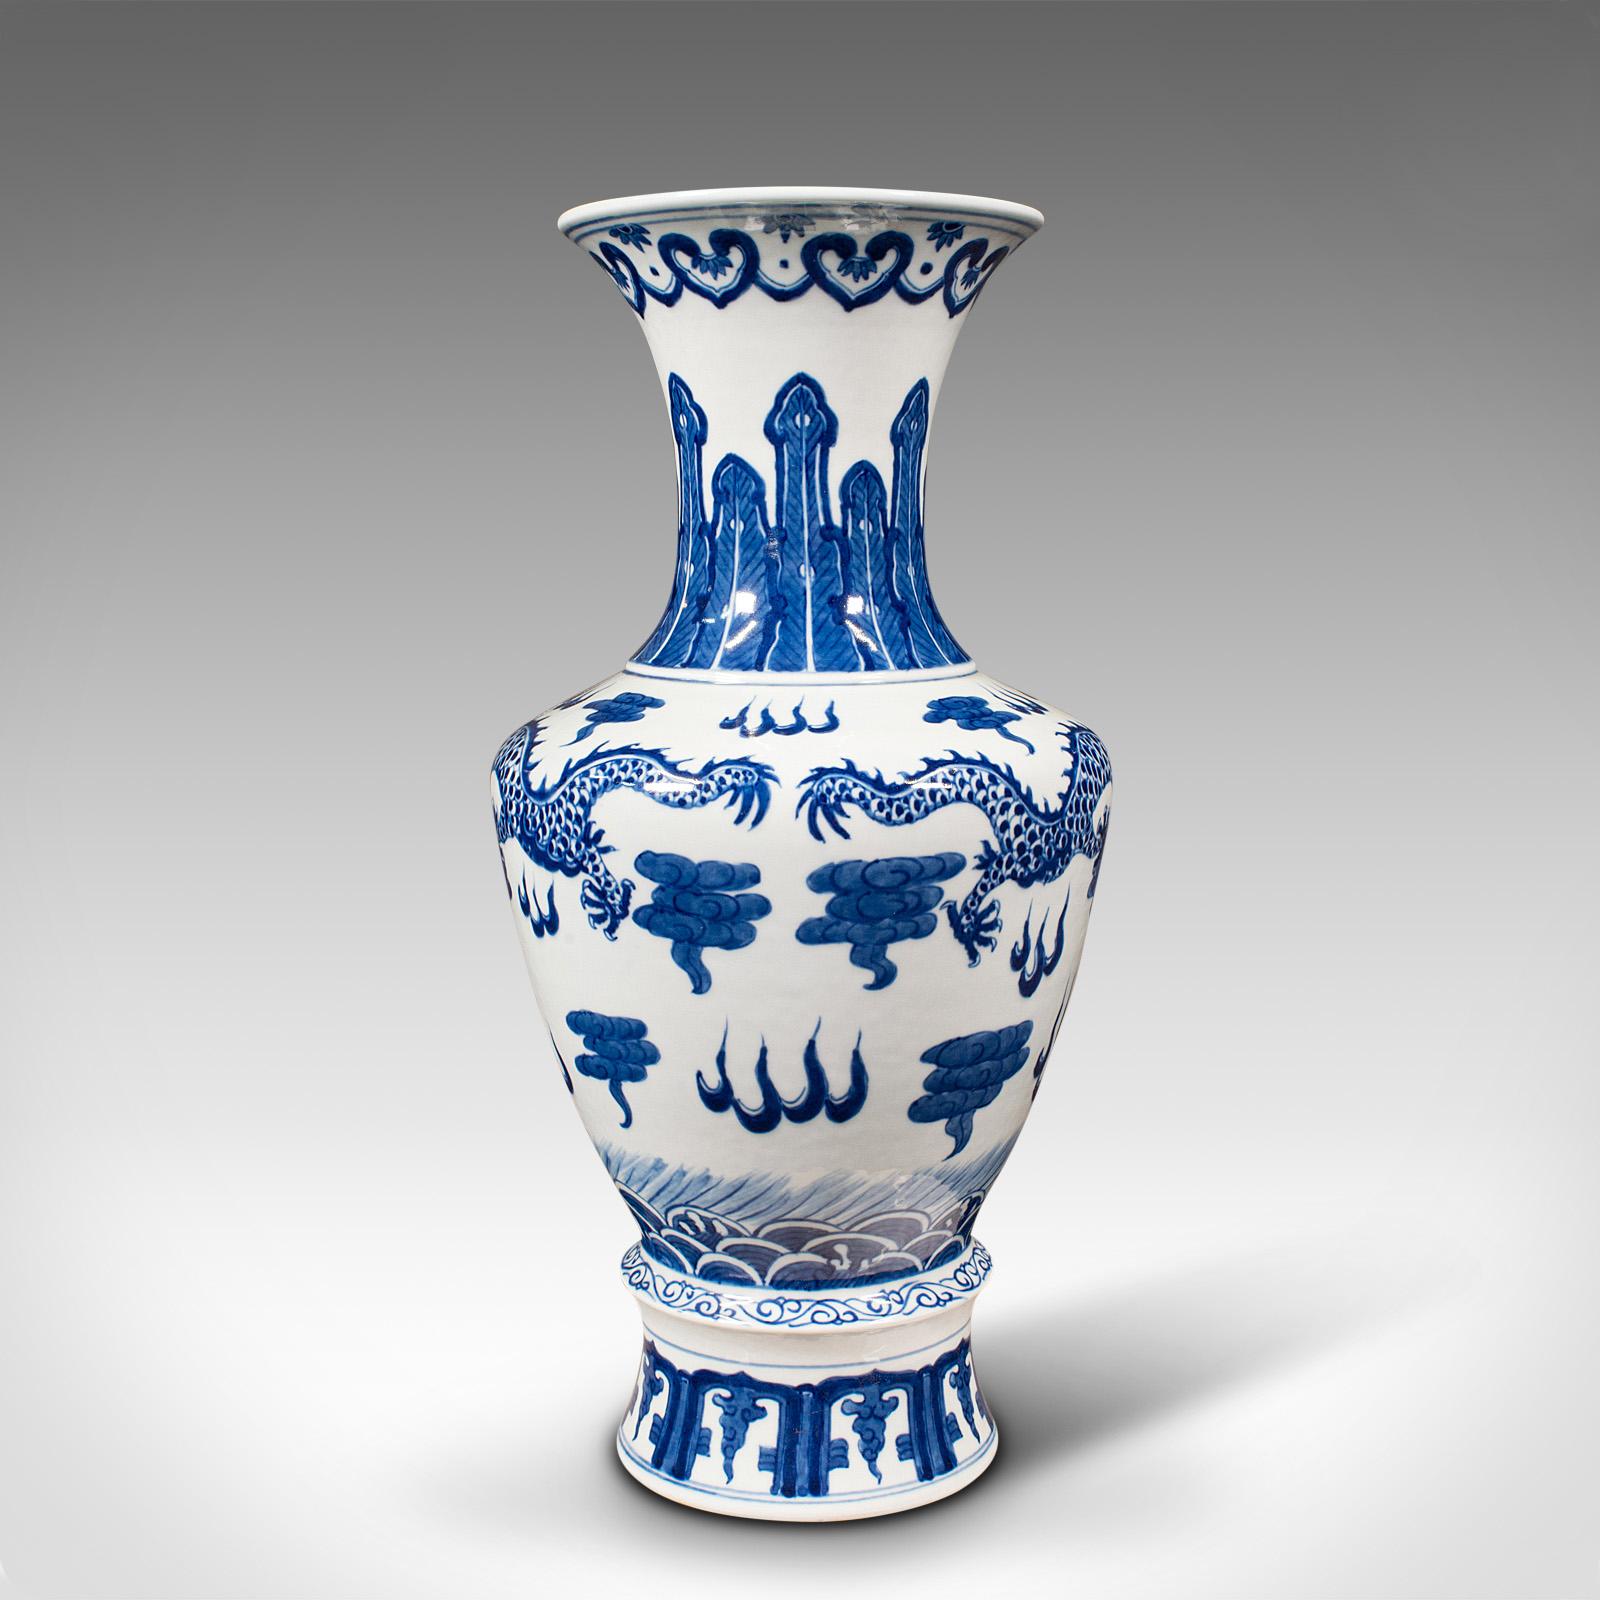 Tall Vintage White & Blue Vase, Chinese, Ceramic, Decorative, Flower, Art Deco For Sale 1